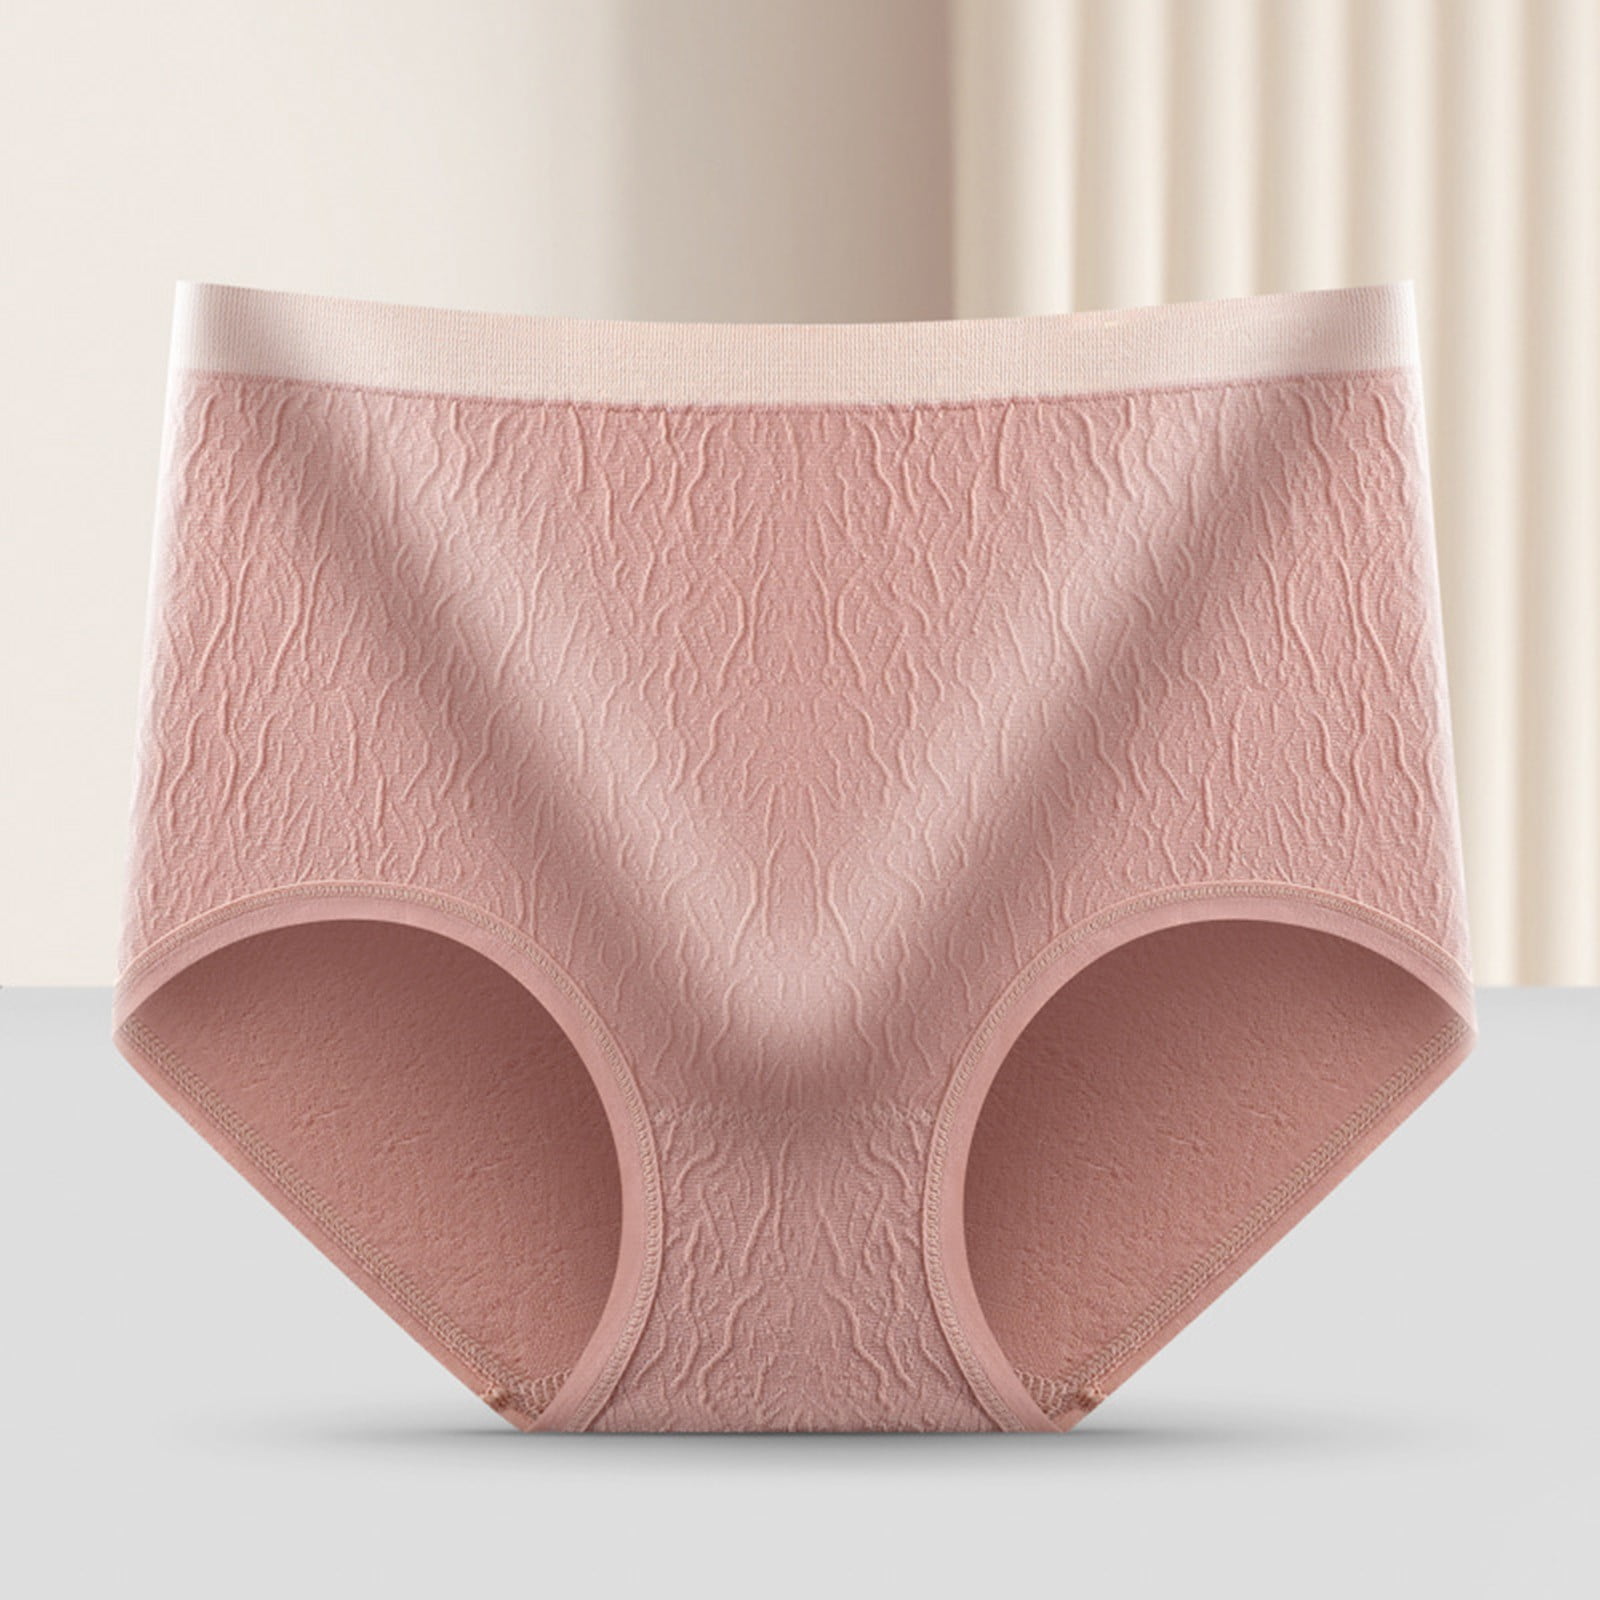 Aayomet Women'S Panties Girl High Waist G String Brief Pantie Thong  Lingerie Knicker Lace Underwear,B XL